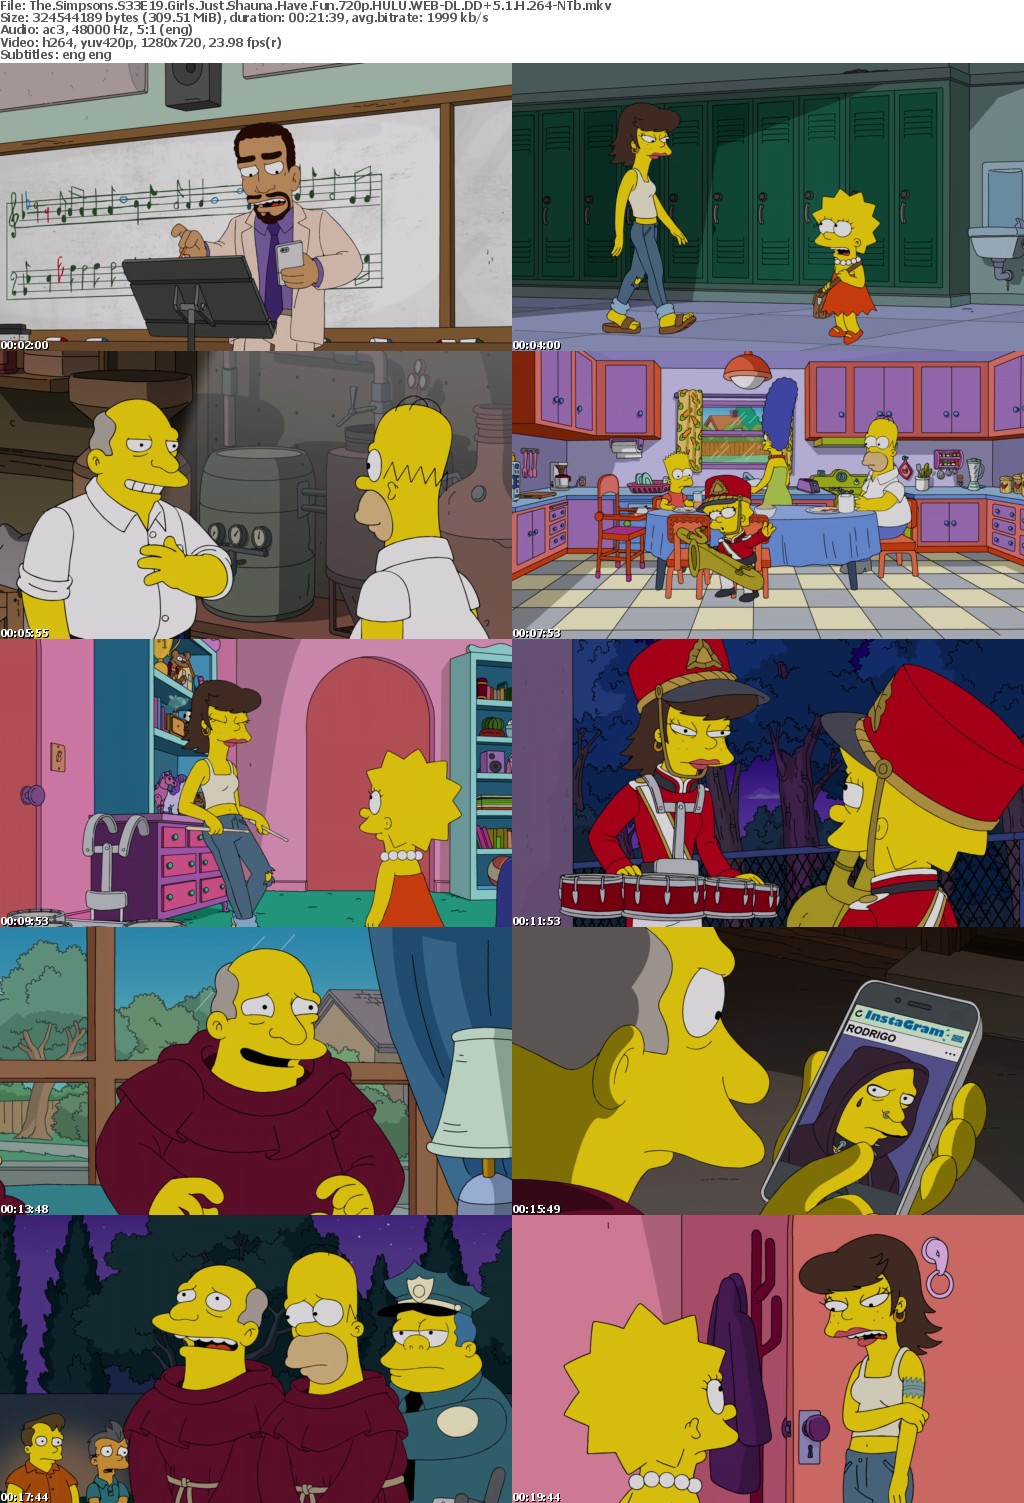 The Simpsons S33E19 Girls Just Shauna Have Fun 720p HULU WEBRip DDP5 1 x264-NTb